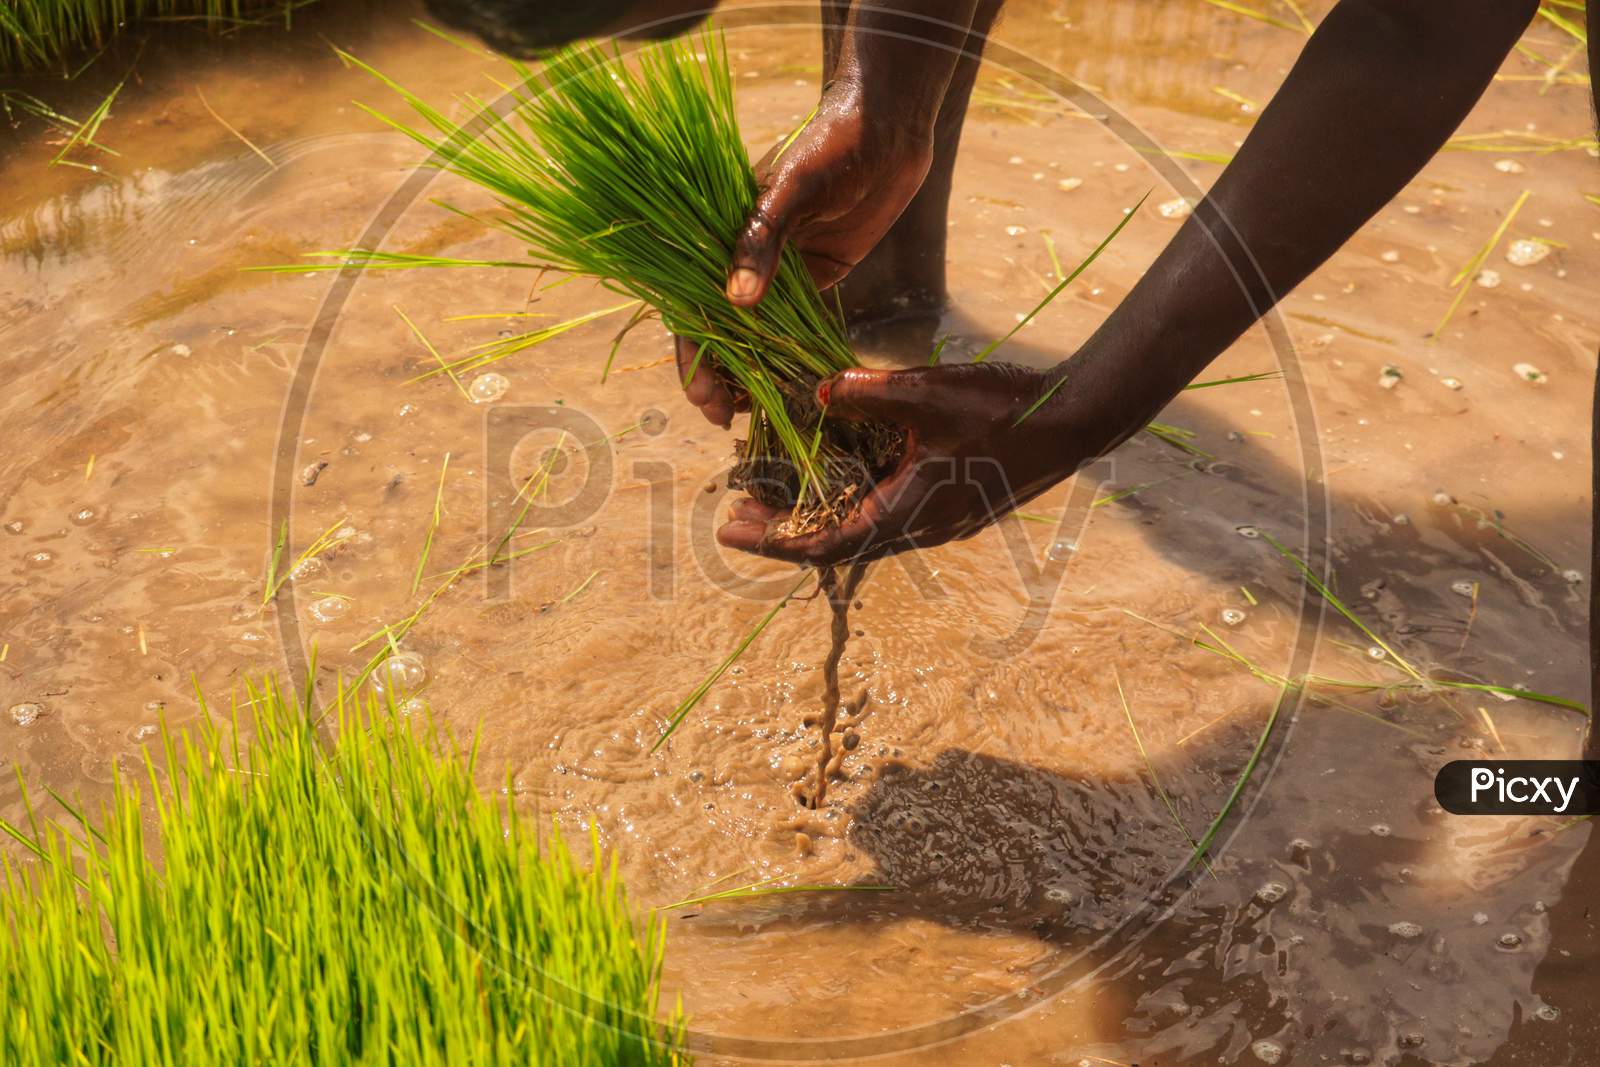 Paddy plucking in monsoon season